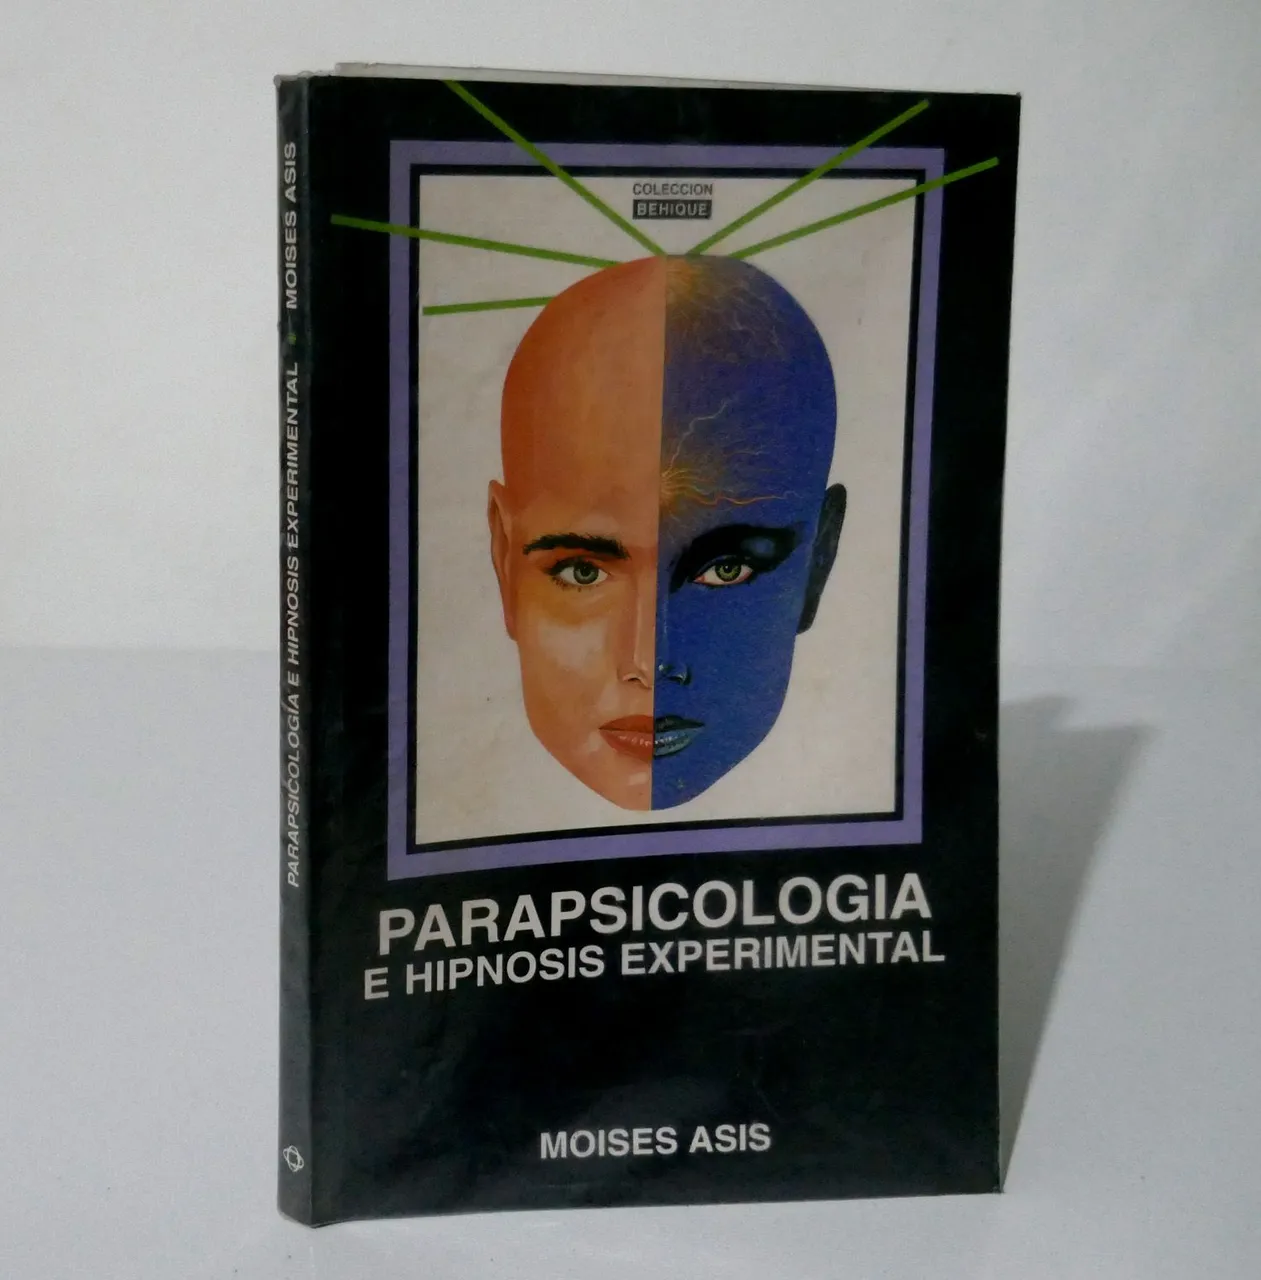 Parapsicologia e Hipnosis.jpg